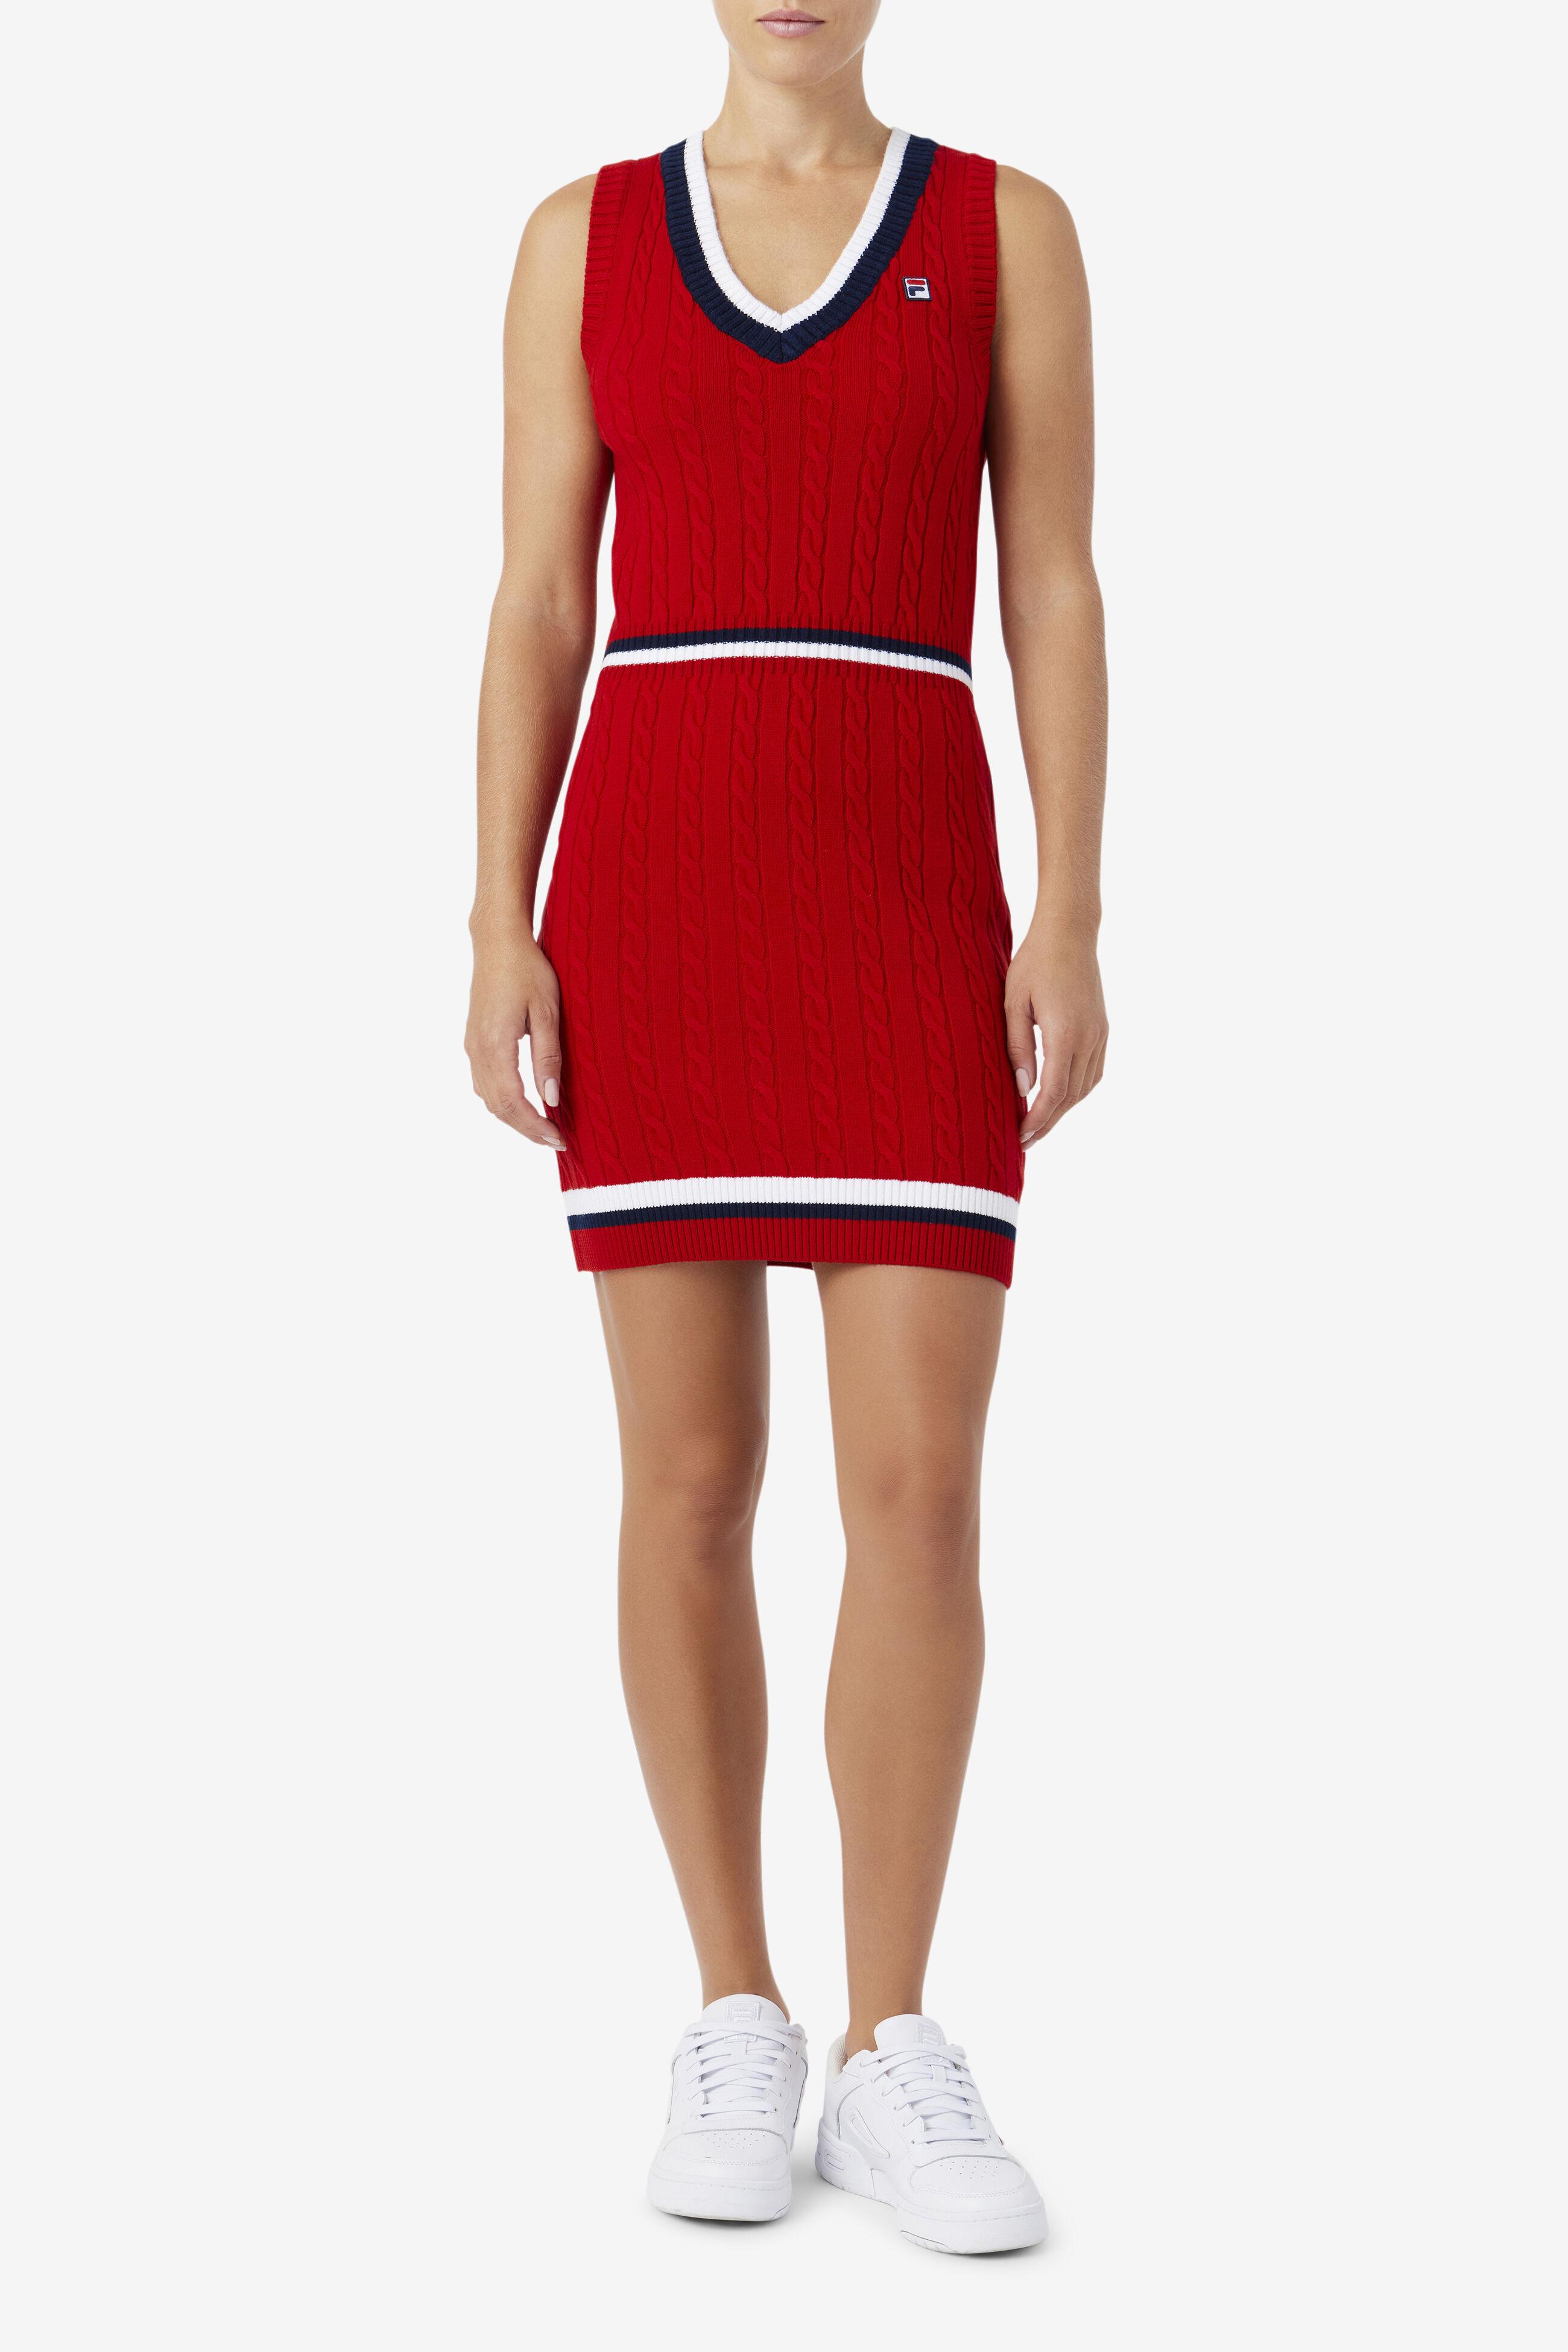 Fila Darian Sweater Knit Dress in Red | Lyst